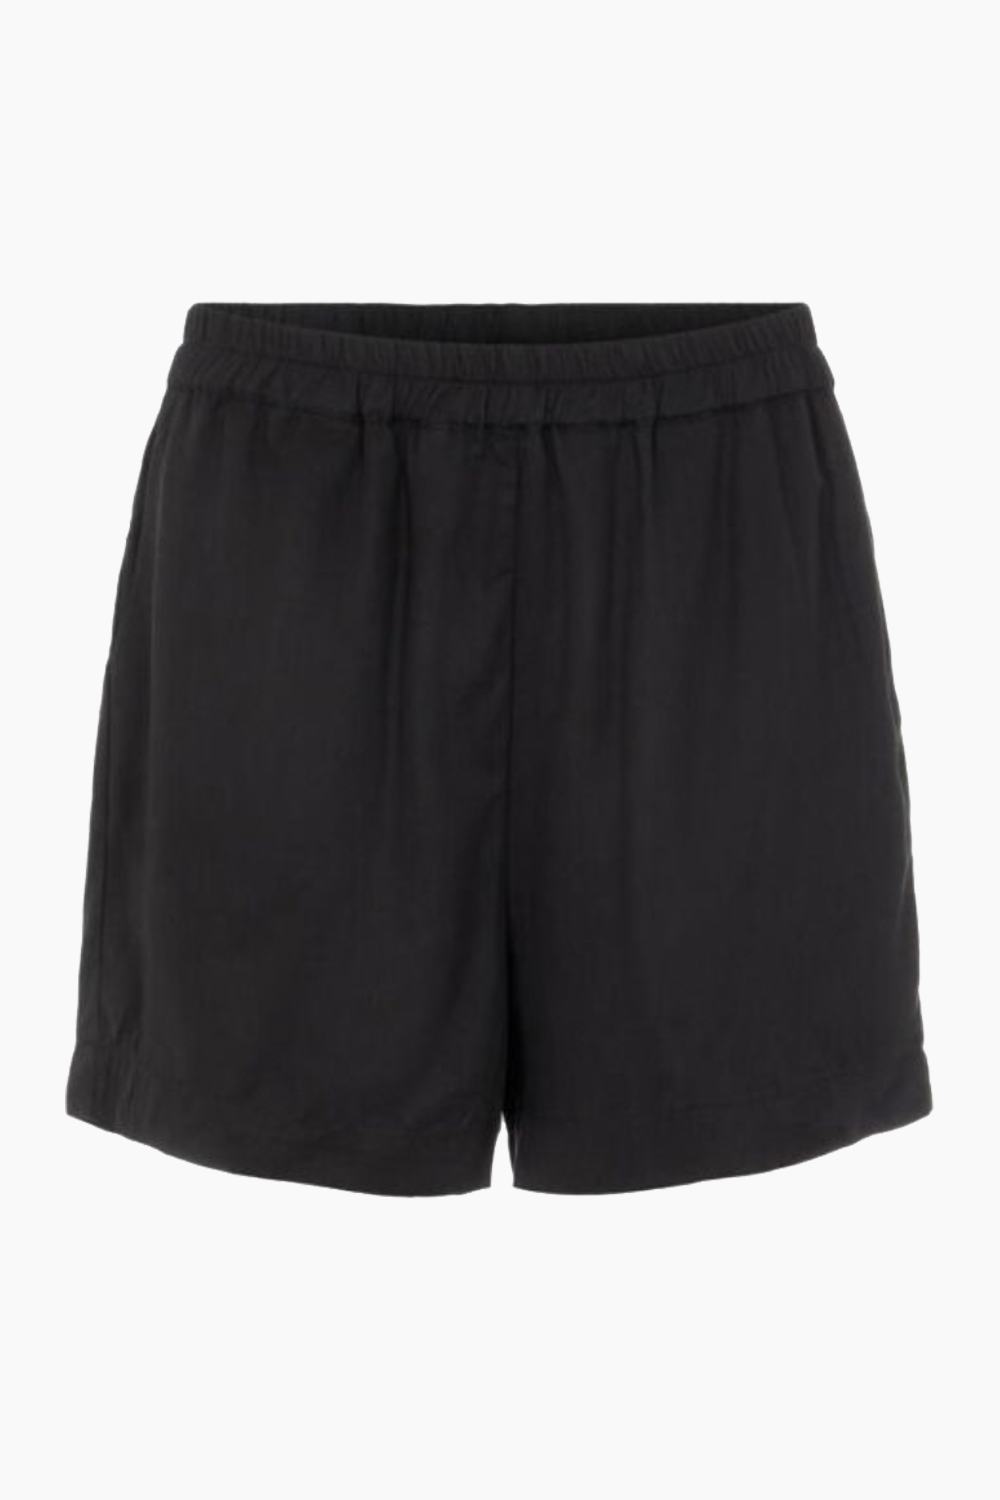 6: ObjTilda Hw Shorts Noos - Black - Object - Sort XS